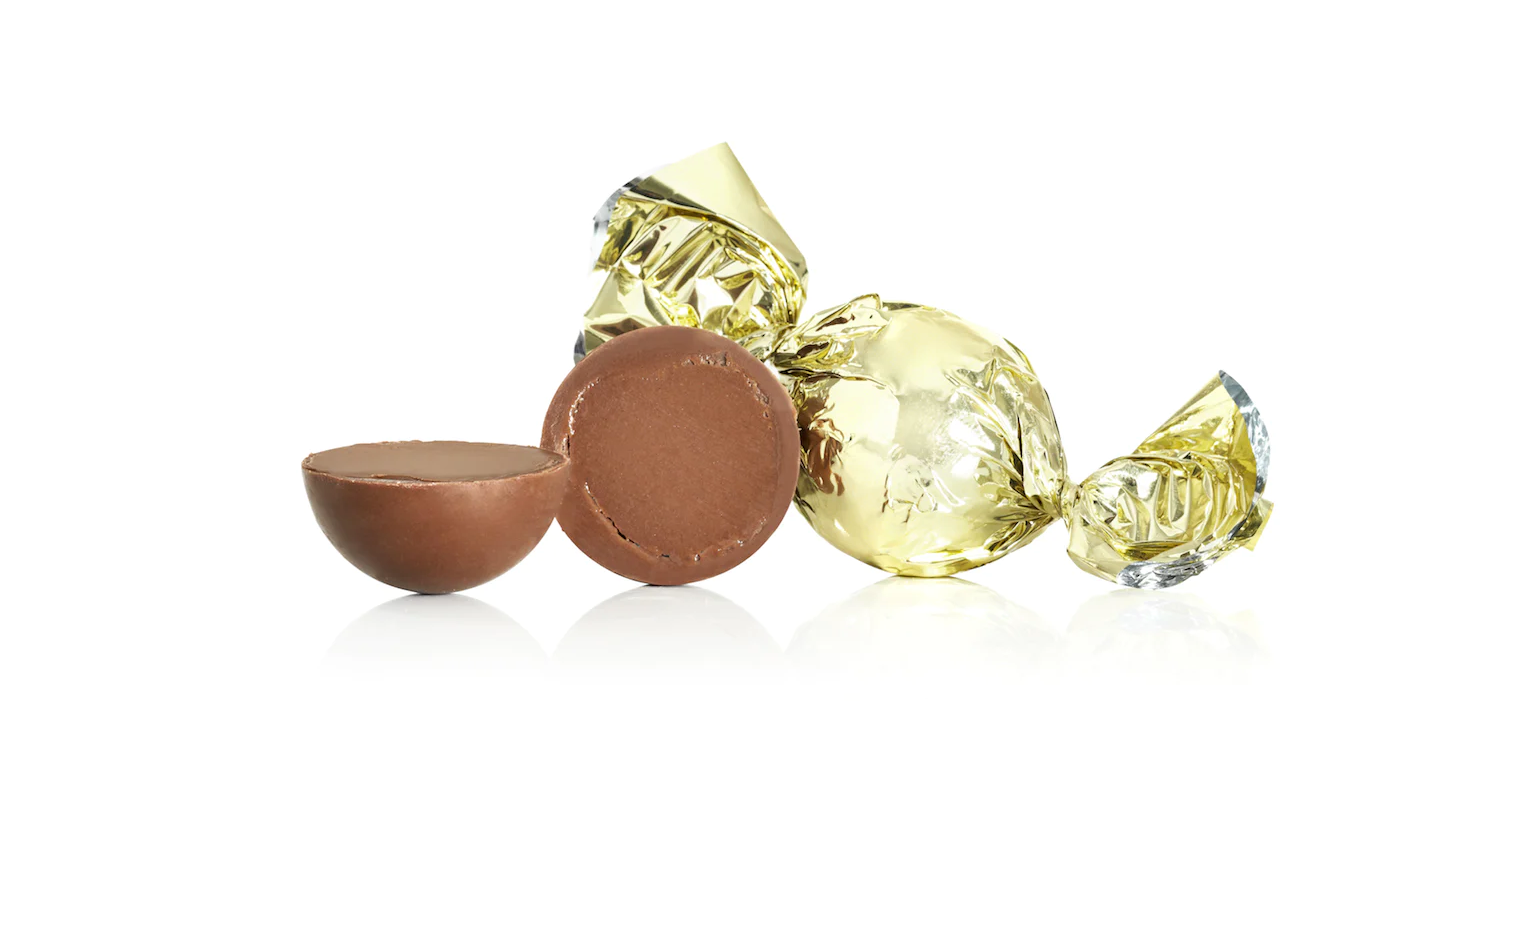 Billede af Fyldt chokoladekugle fra Cocoture i guld papir - Flødechokolade med karamel